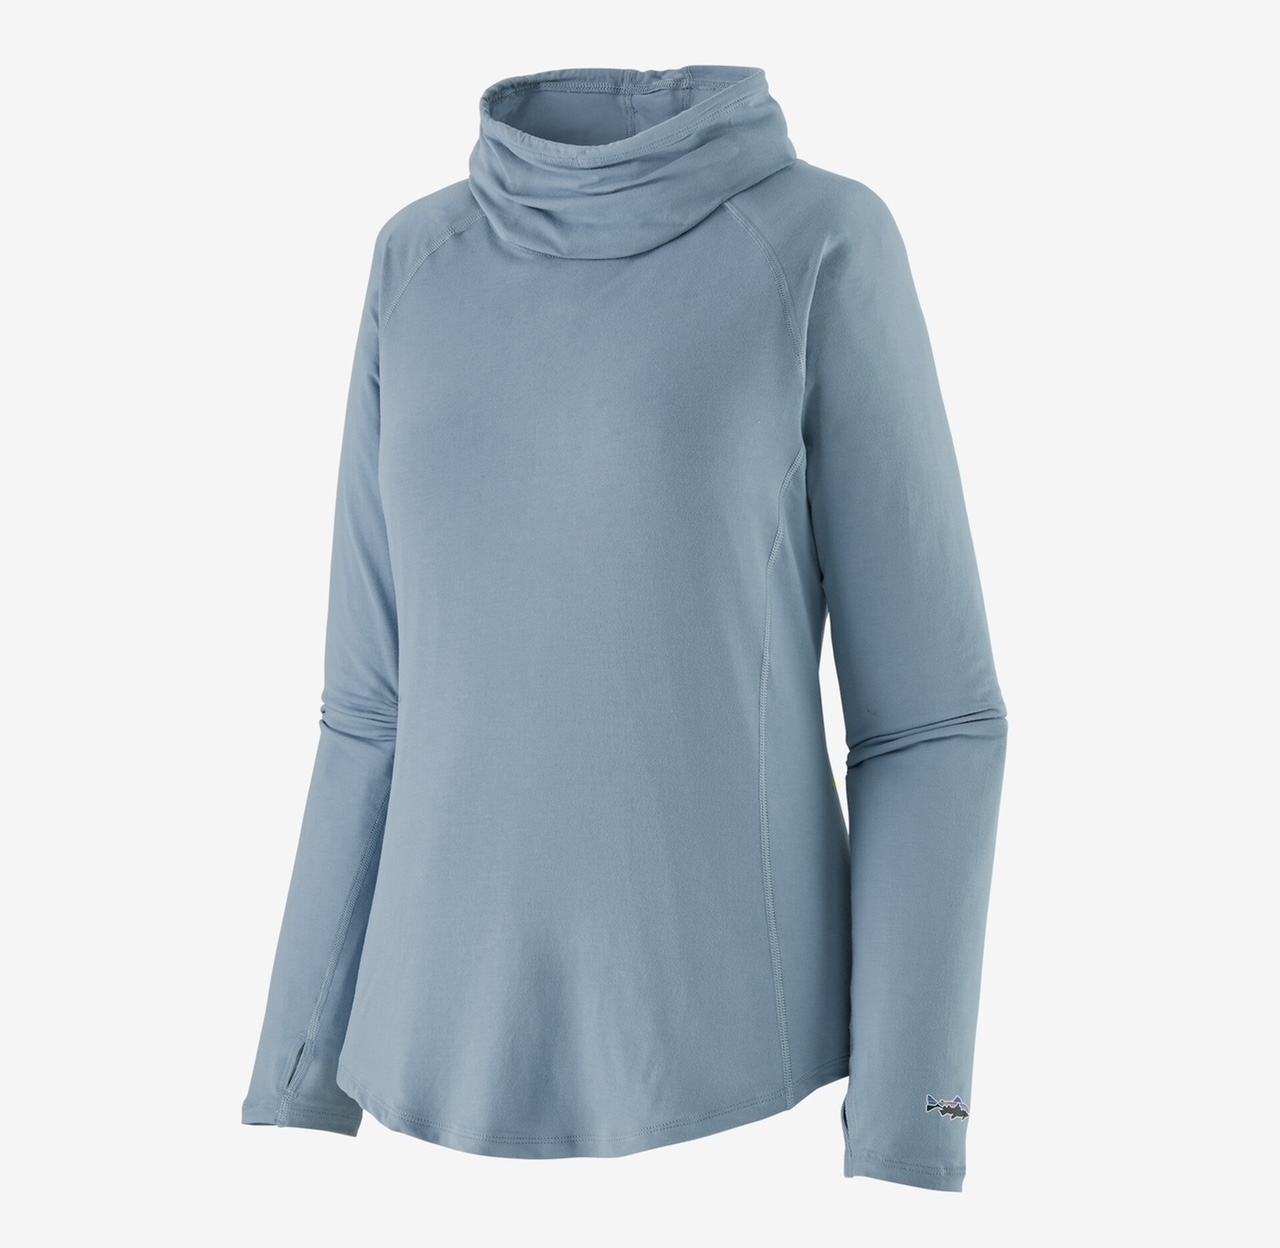 Patagonia W's Tropic Comfort Natural Shirt - Light Plume Grey - XS